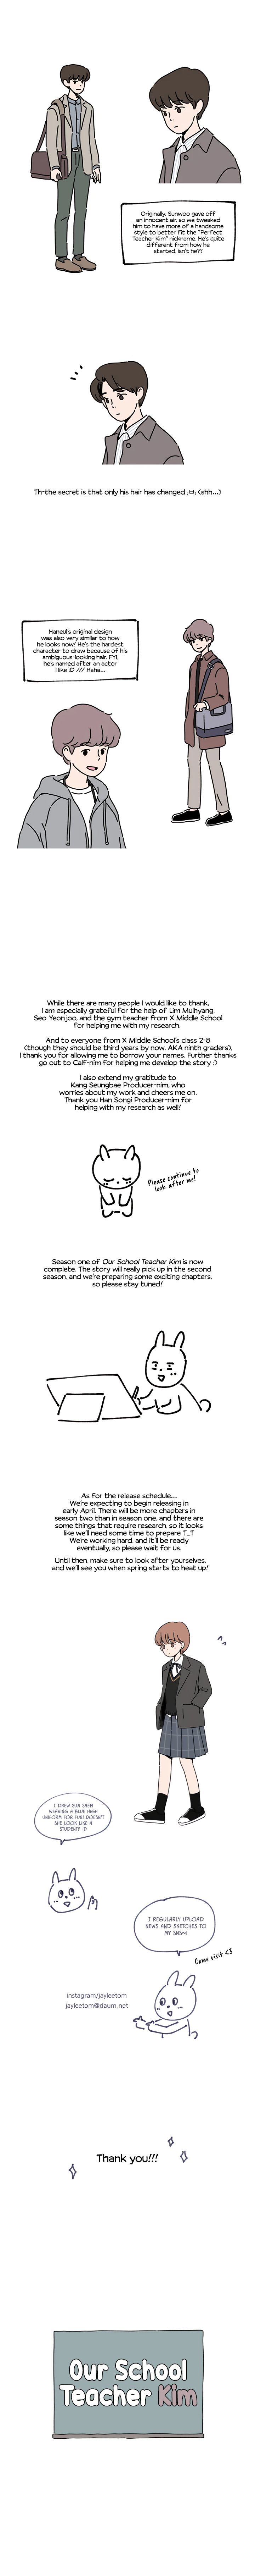 Our School Teacher Kim - Page 2